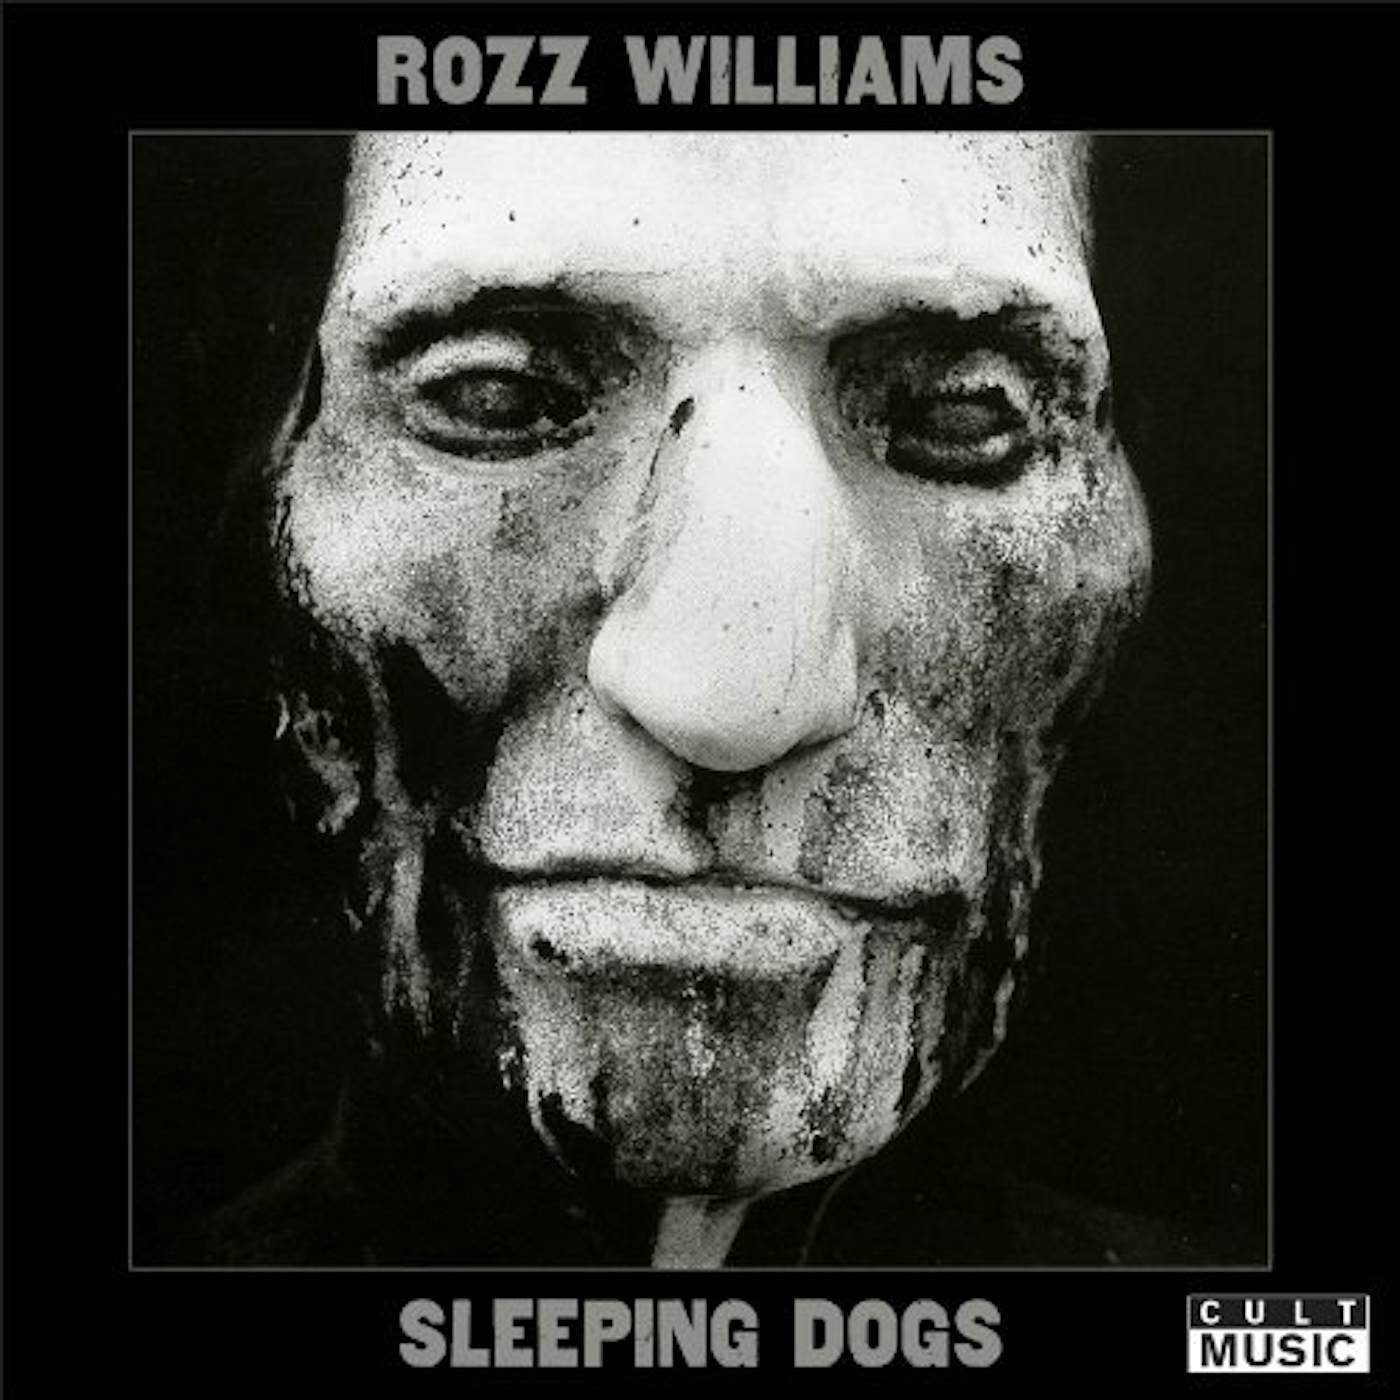 Rozz Williams SLEEPING DOGS CD